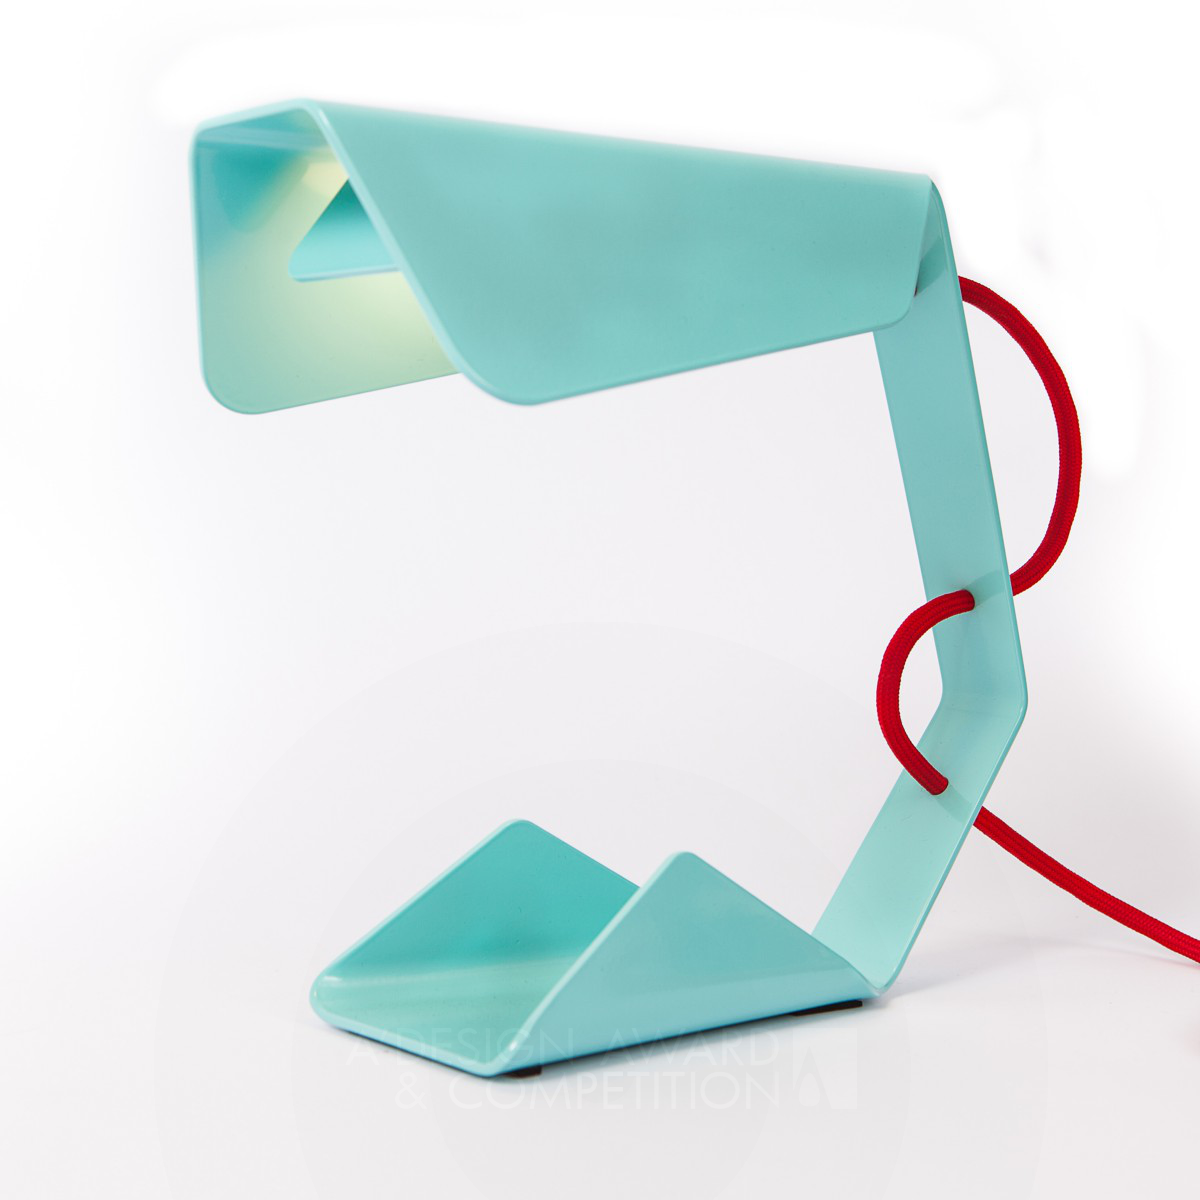 Aero Postale Lamp by Nils Fischer